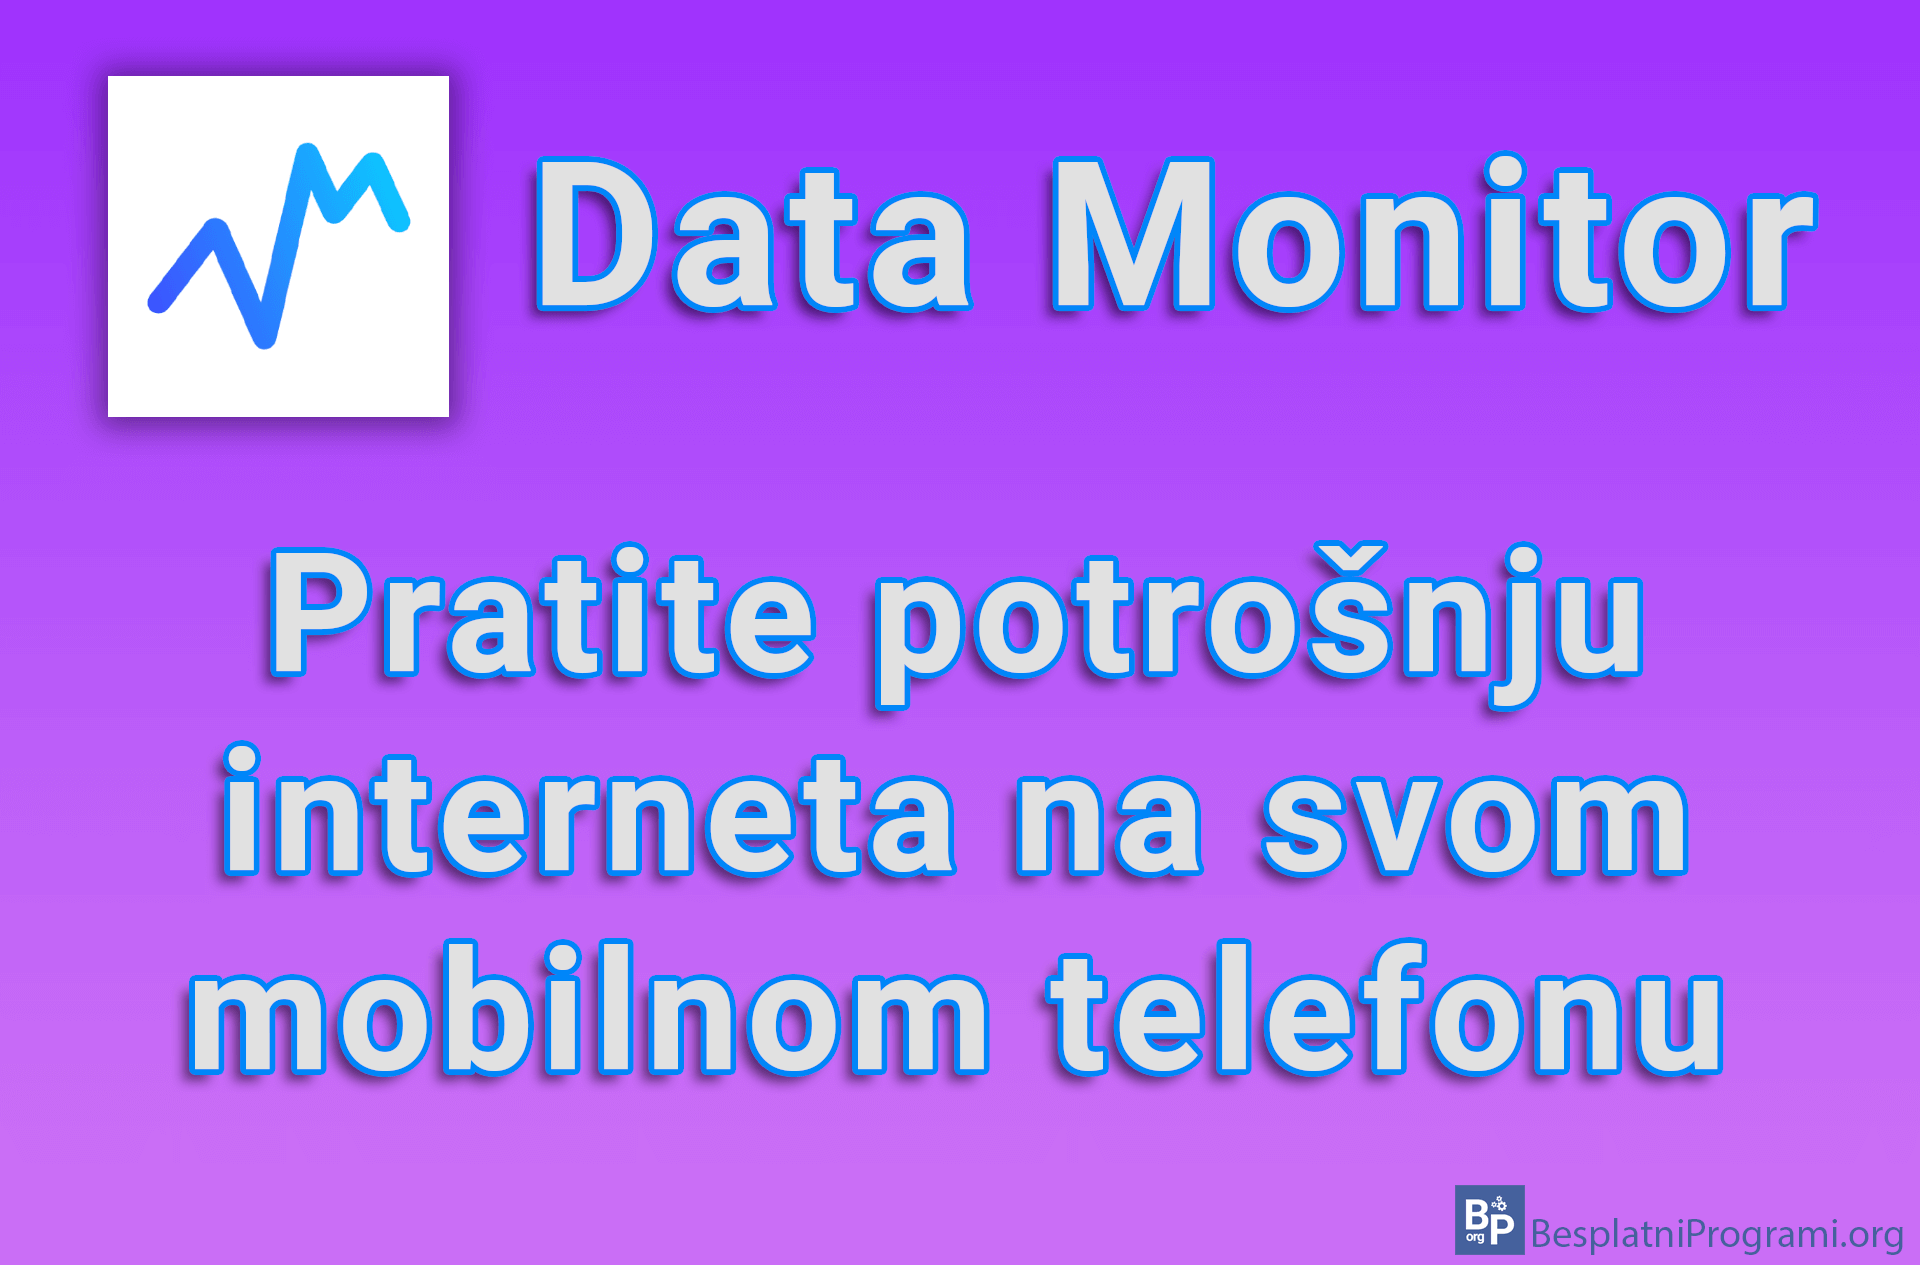 Data Monitor – Pratite potrošnju interneta na svom mobilnom telefonu